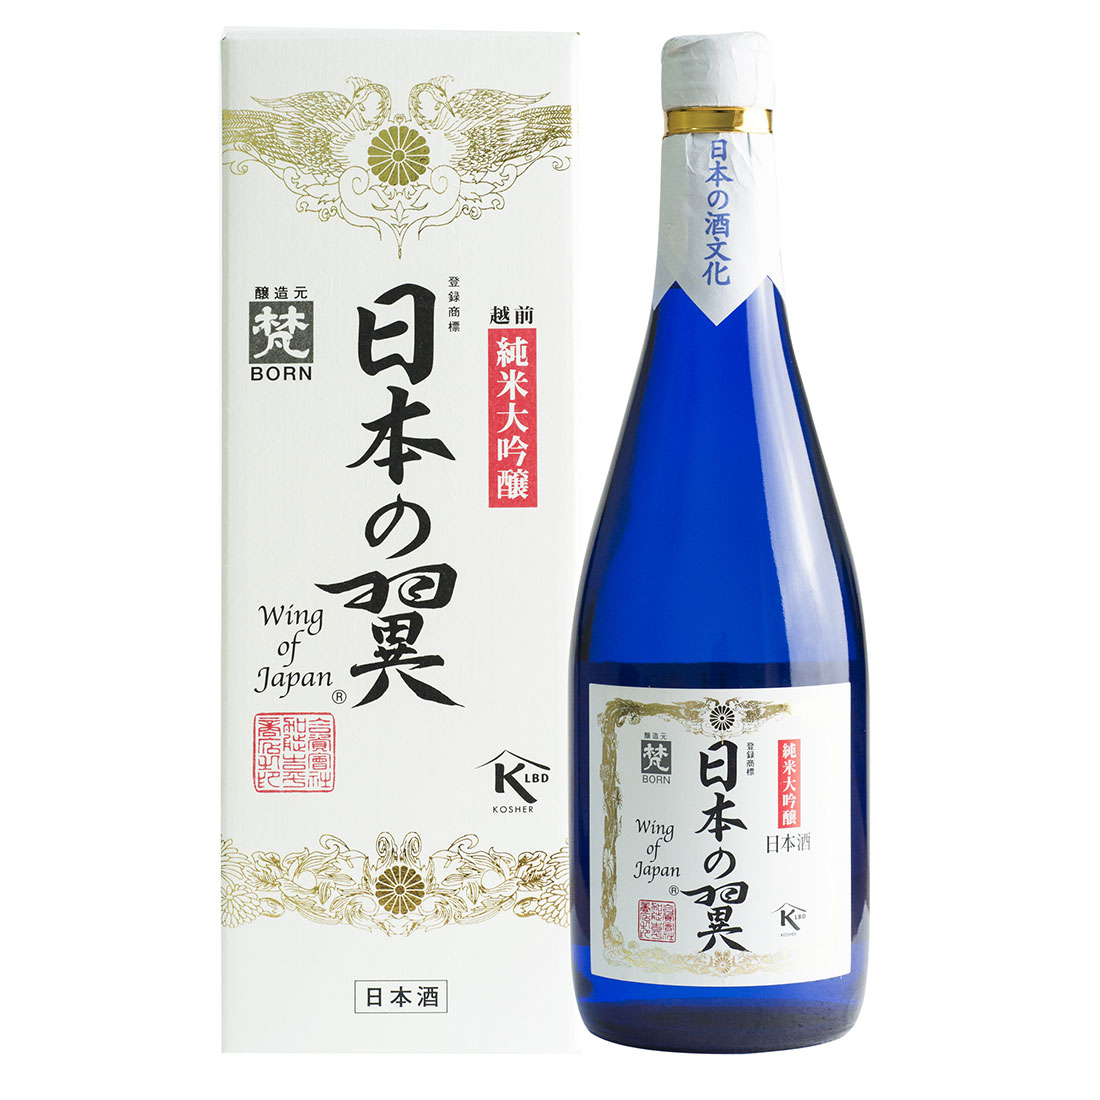 Bottle-Born-Nihonnotsubasa-Wing-of-Japan-Junmai-Daiginjo-Sake